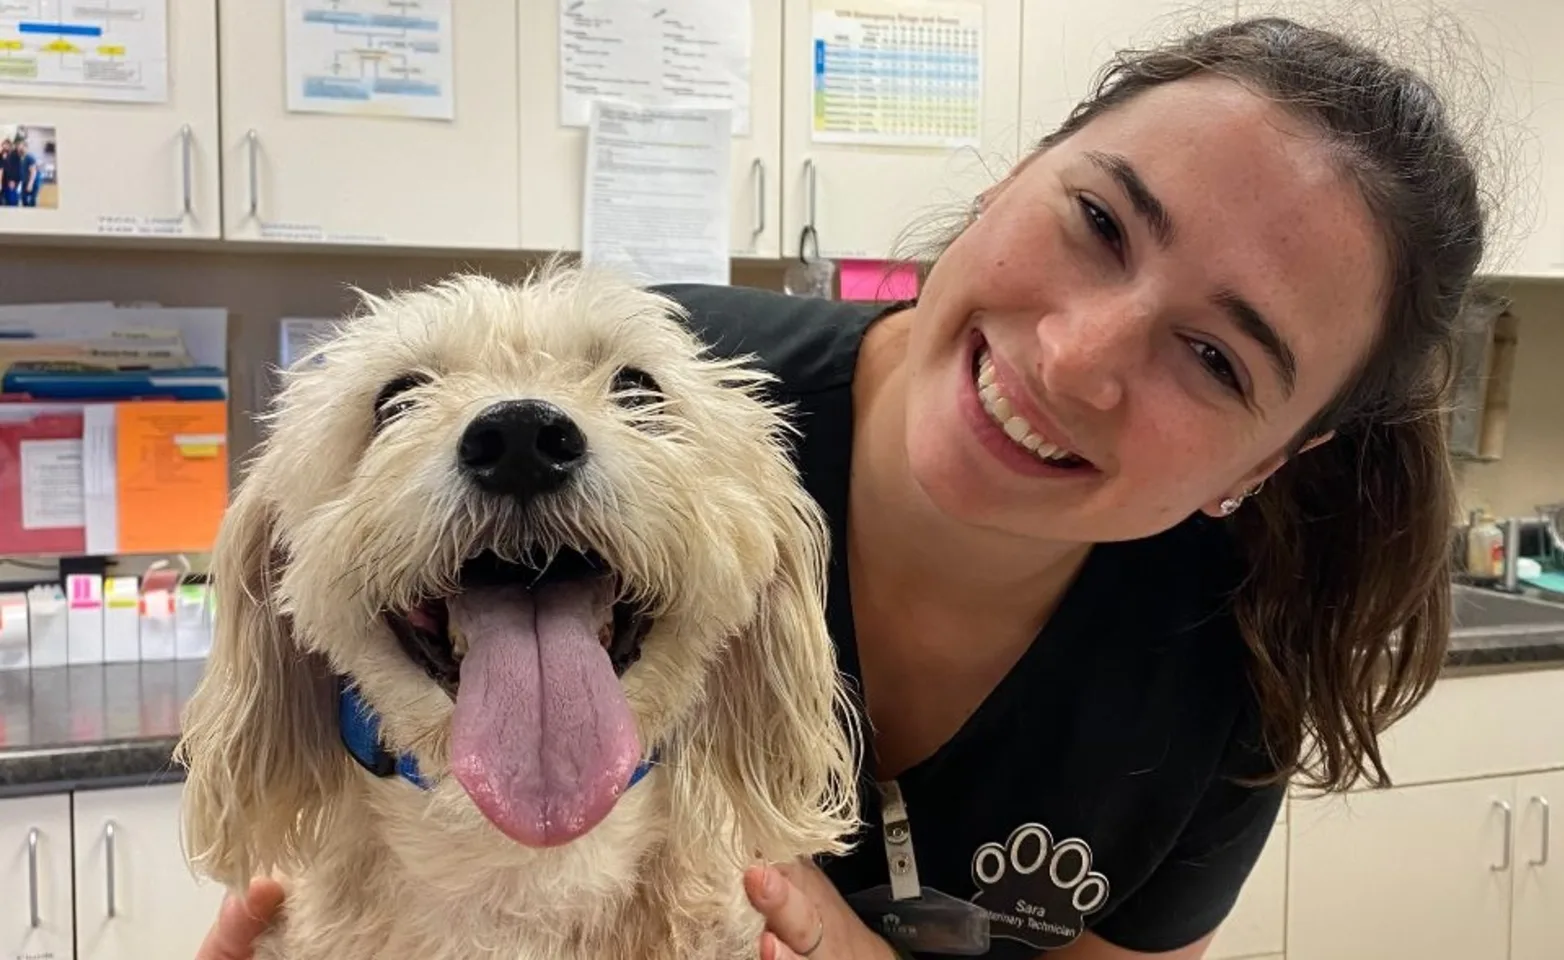 Staff smiling with dog at Pima North Animal Hospital.